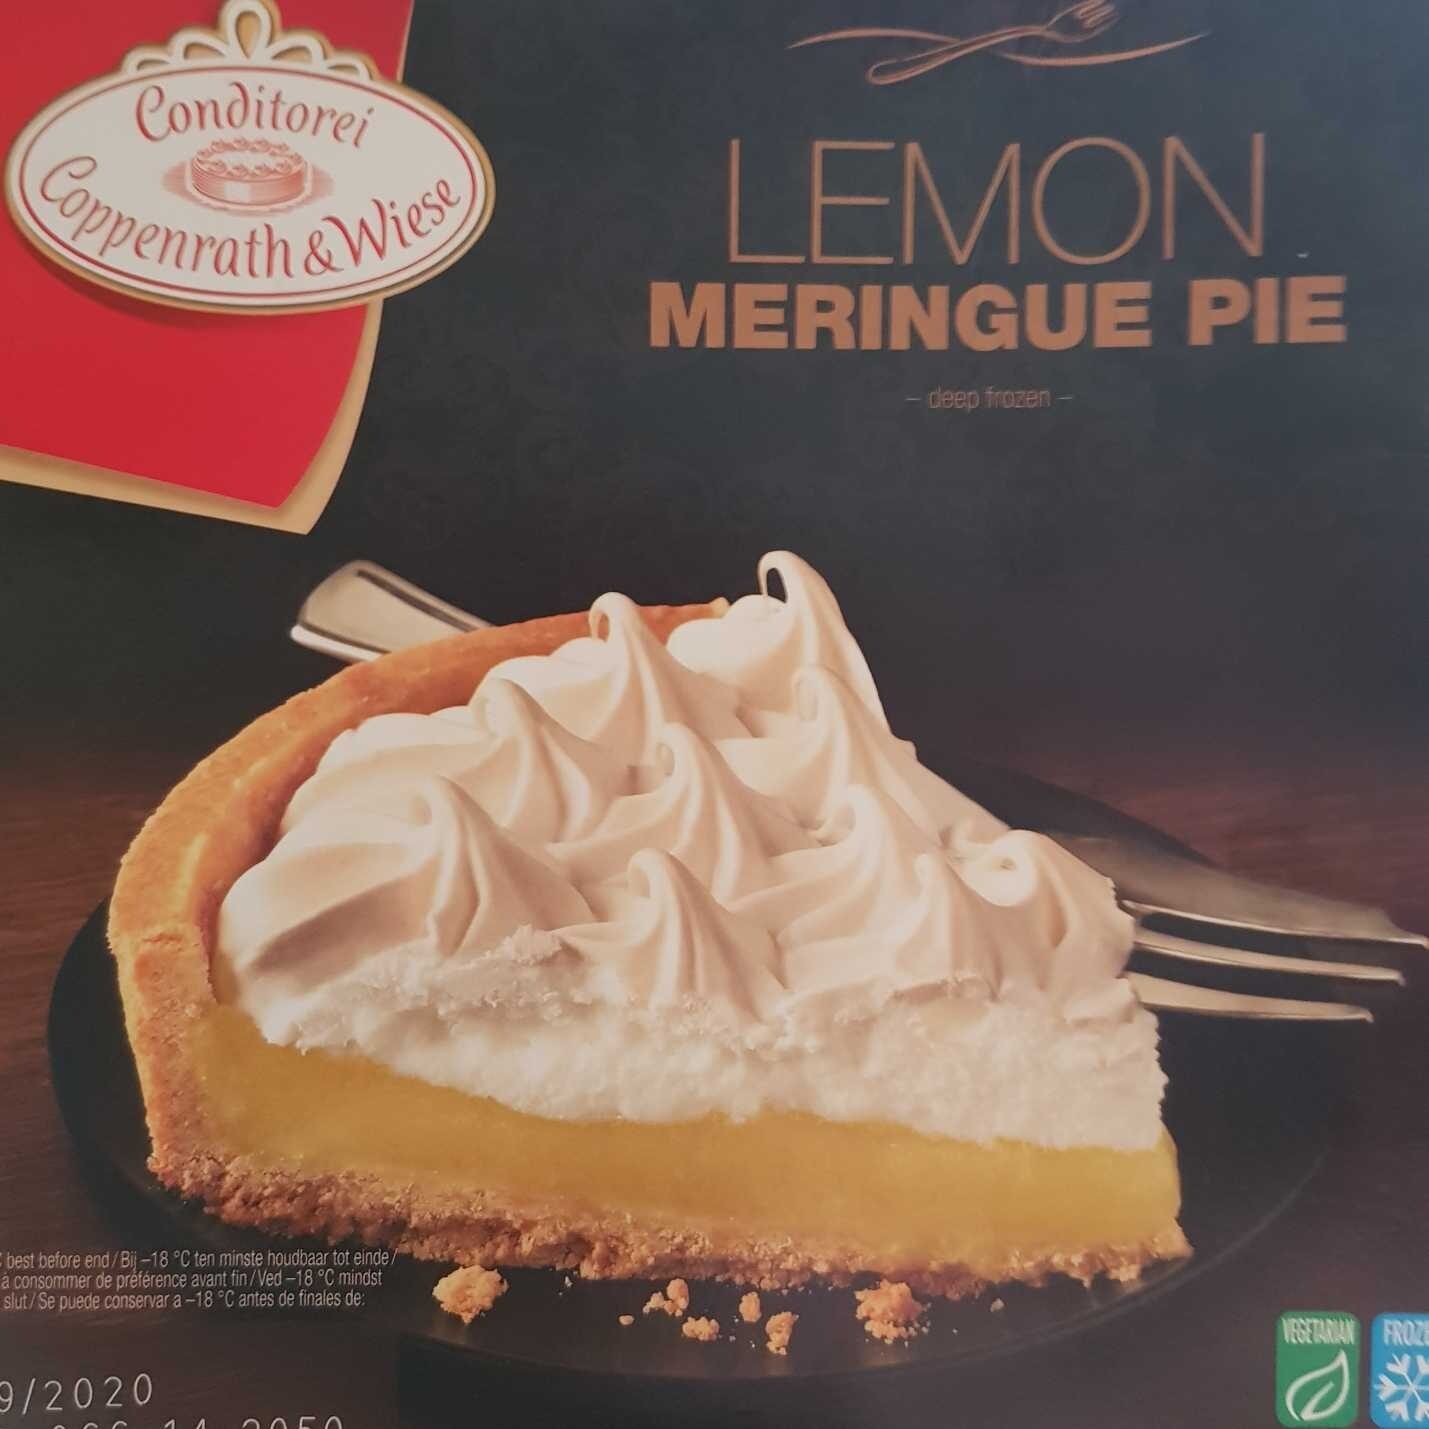 Lemon meringue pie - Product - en